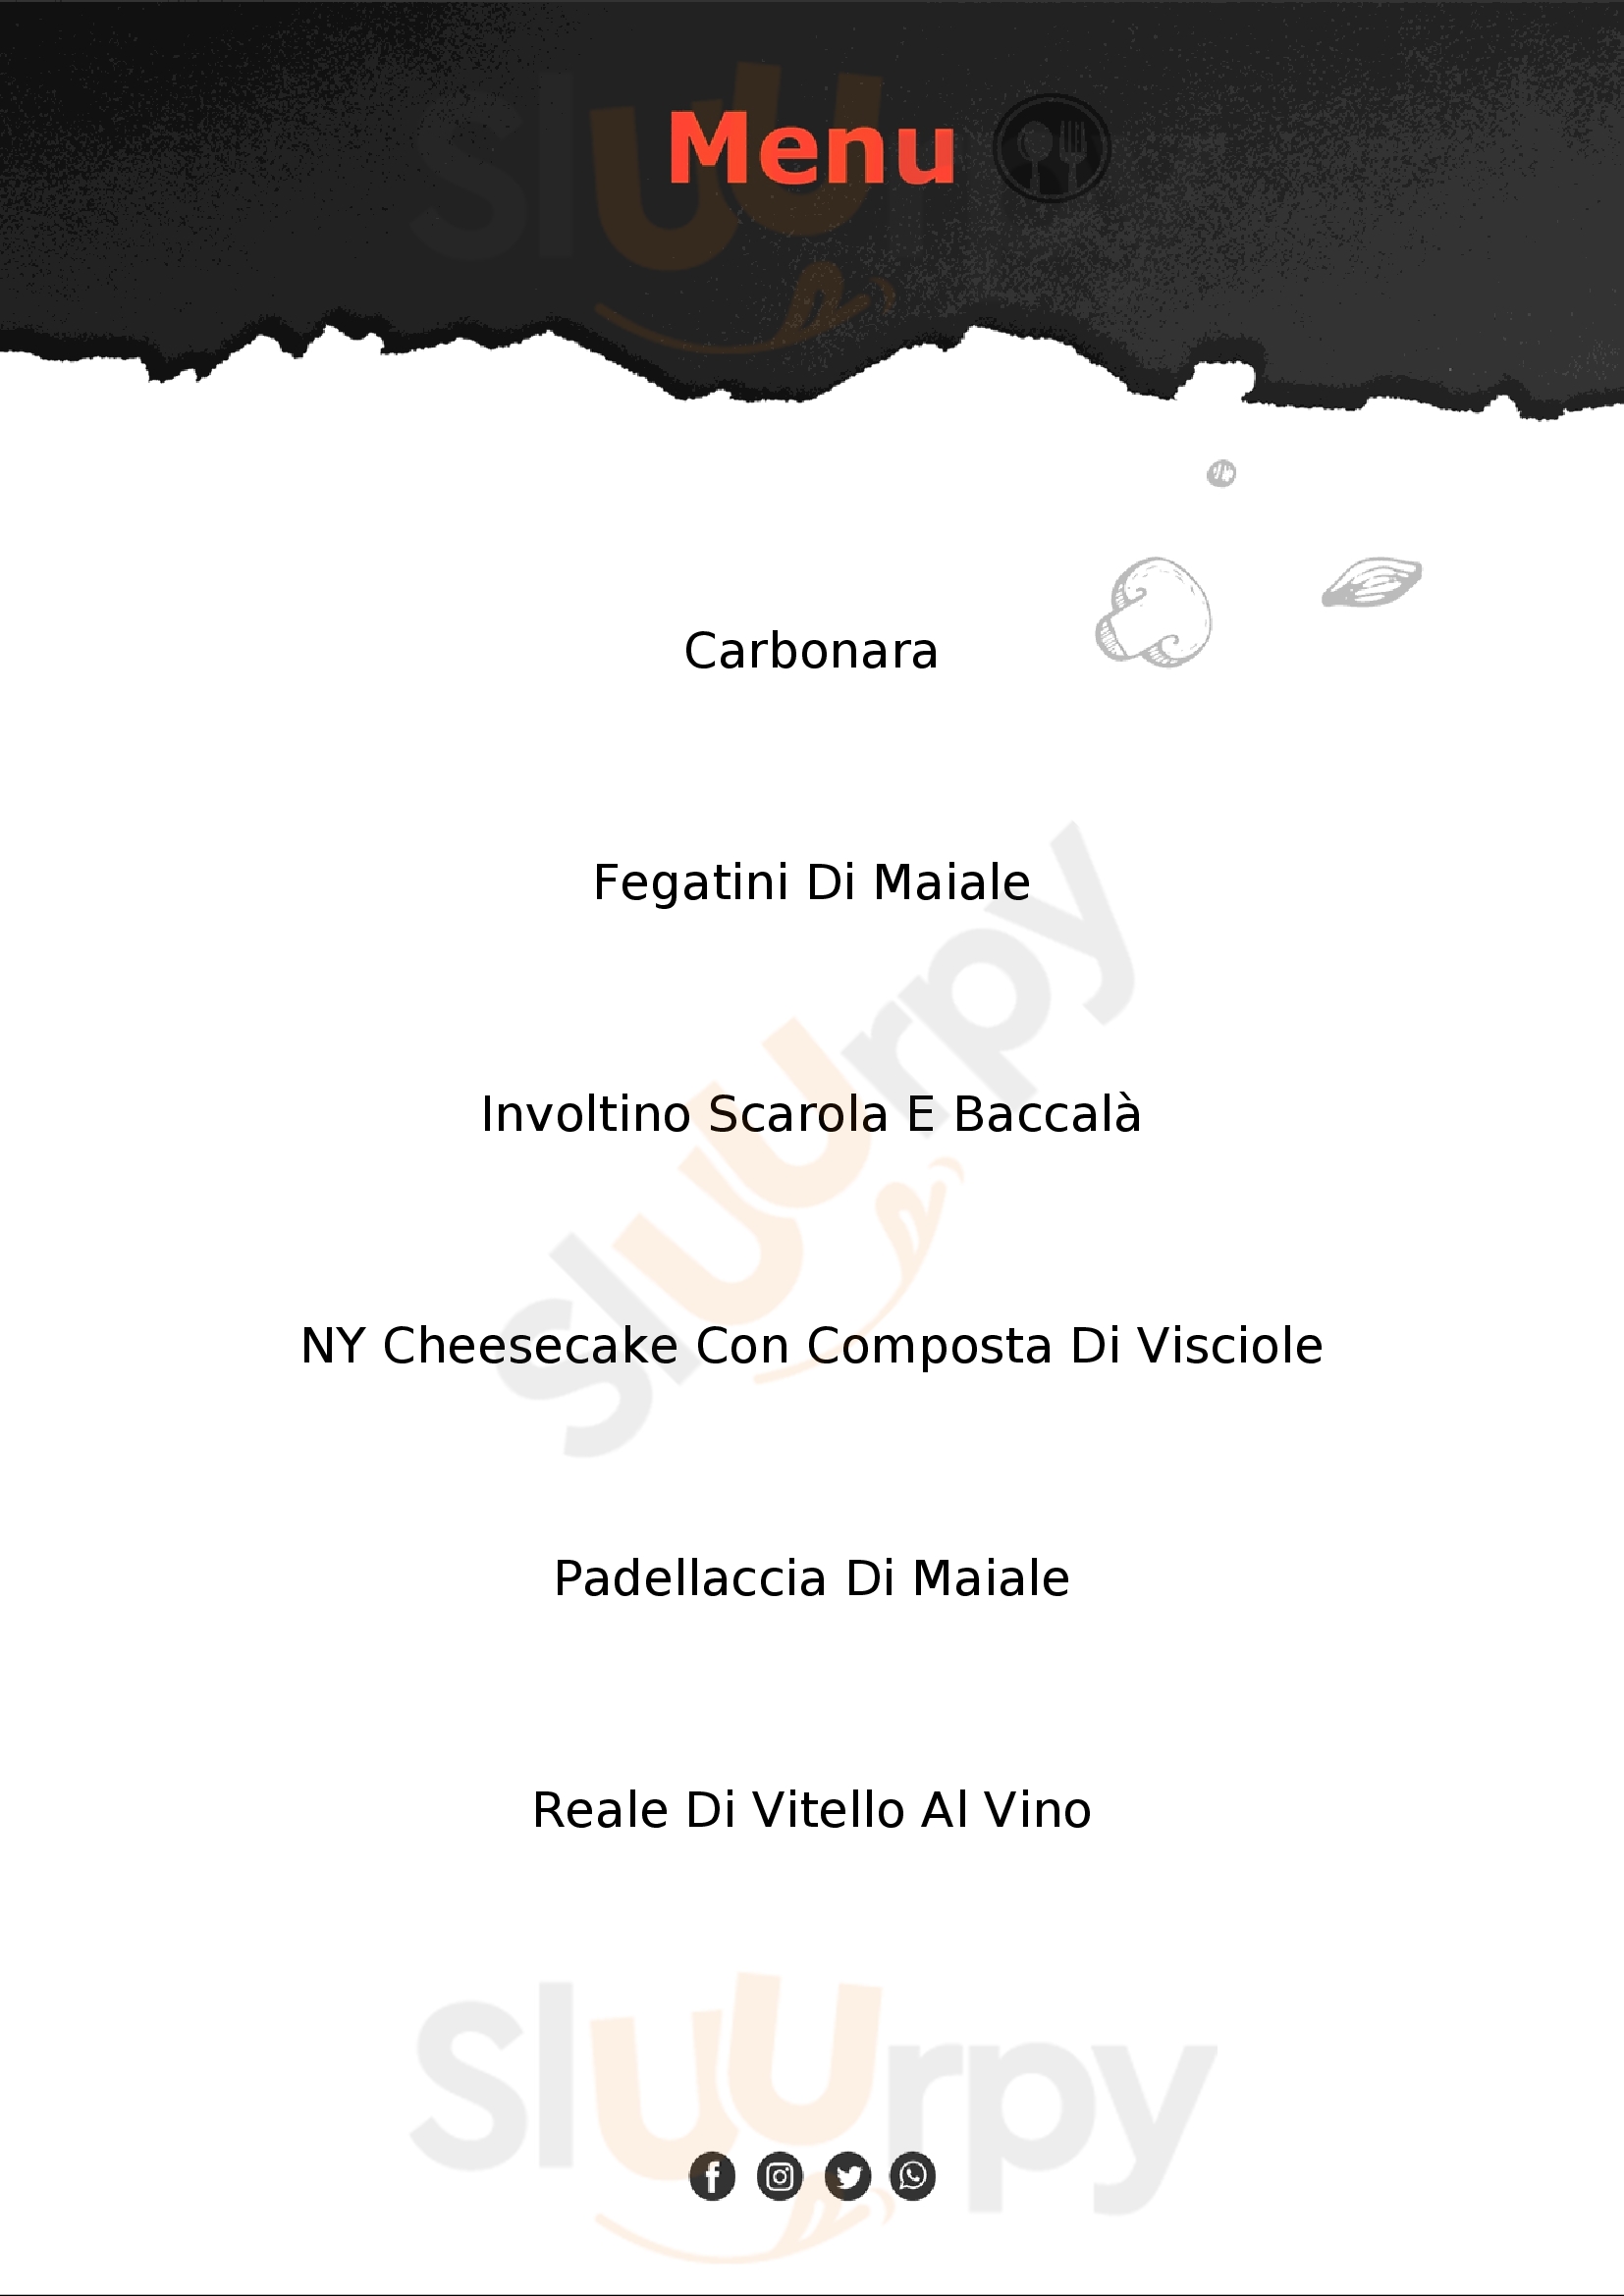 Menabó Vino e Cucina Roma menù 1 pagina